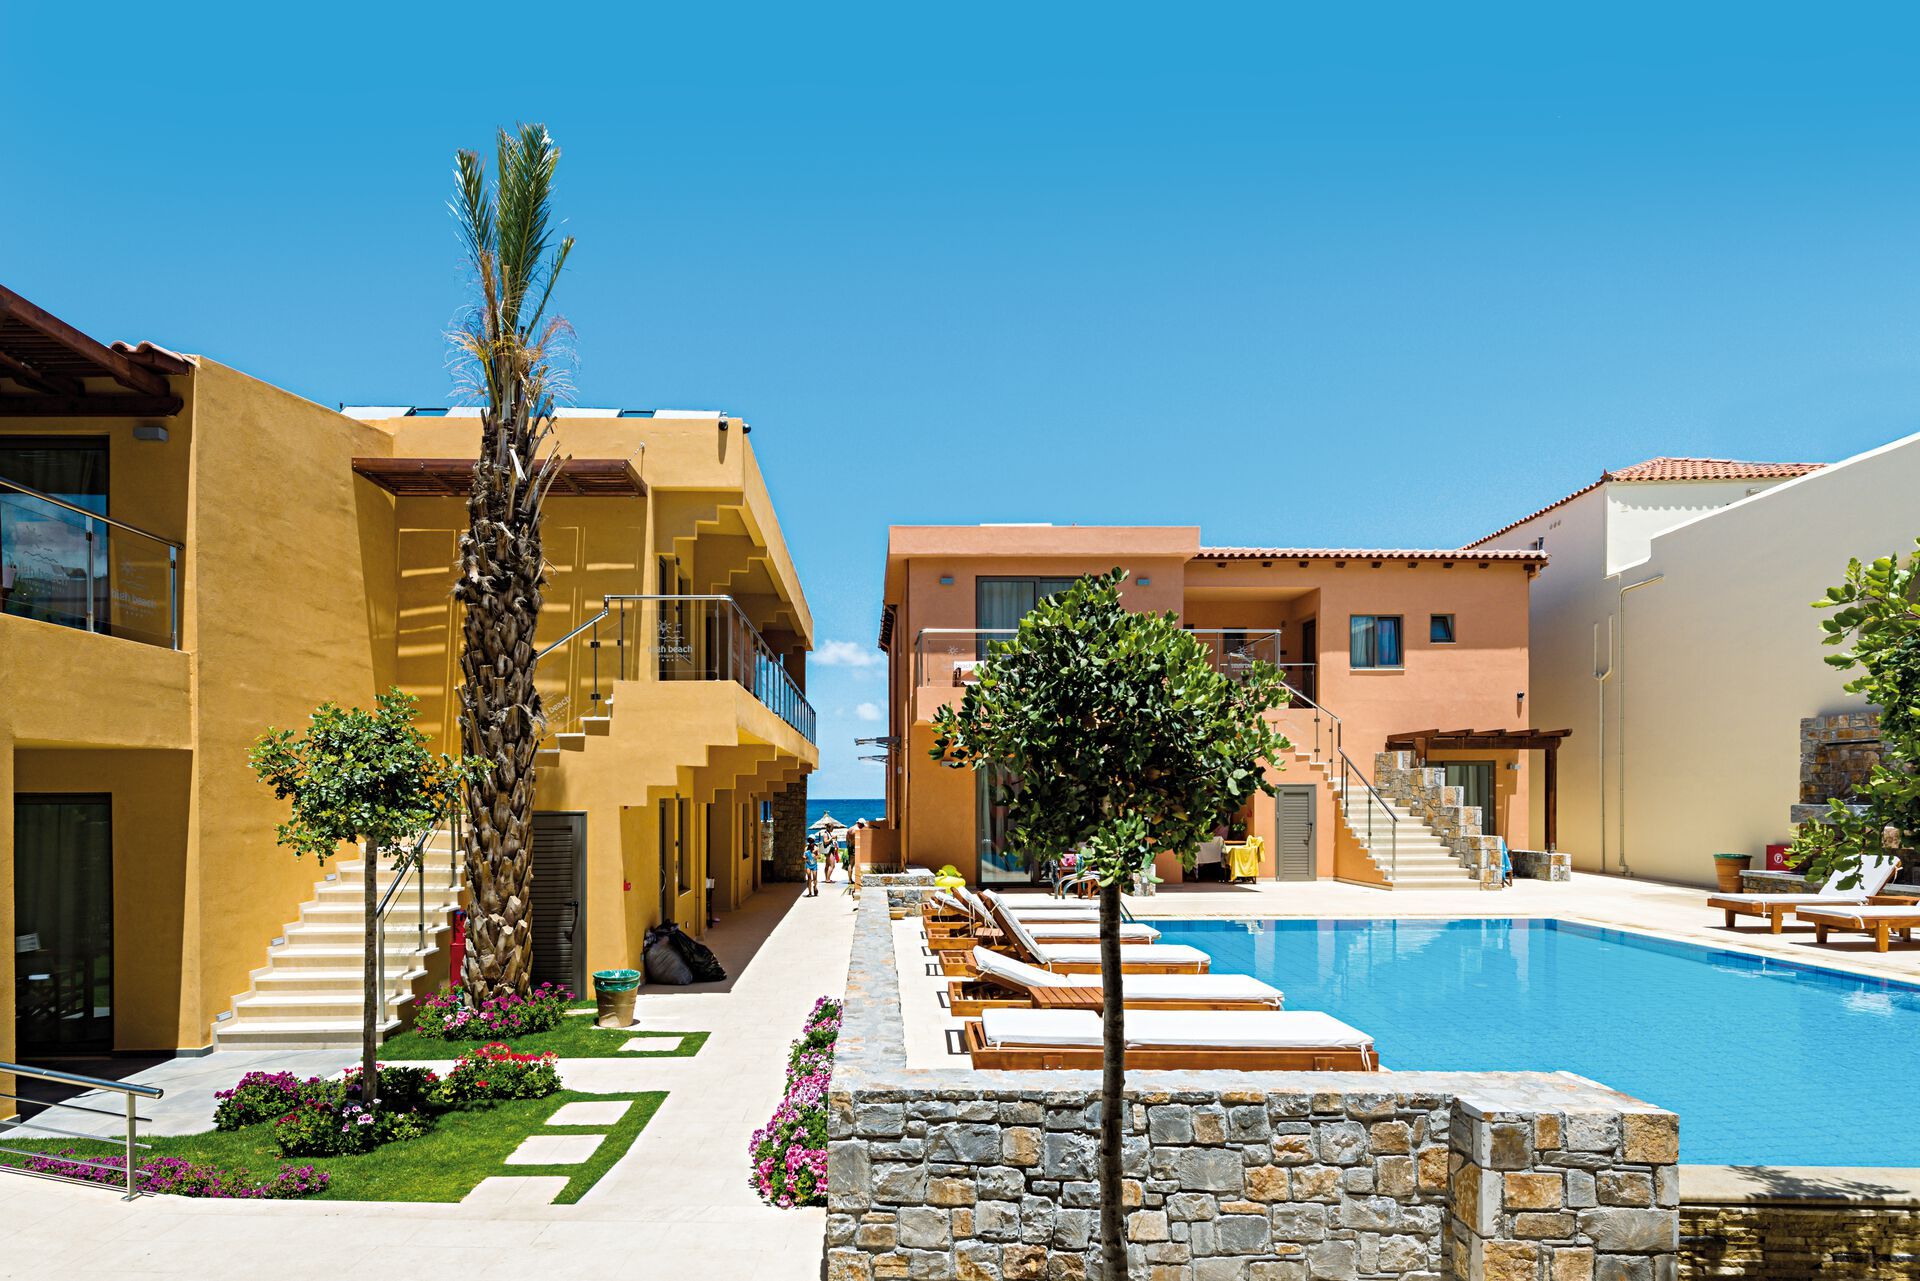 Crète - Malia - Grèce - Iles grecques - Hôtel High Beach 5*